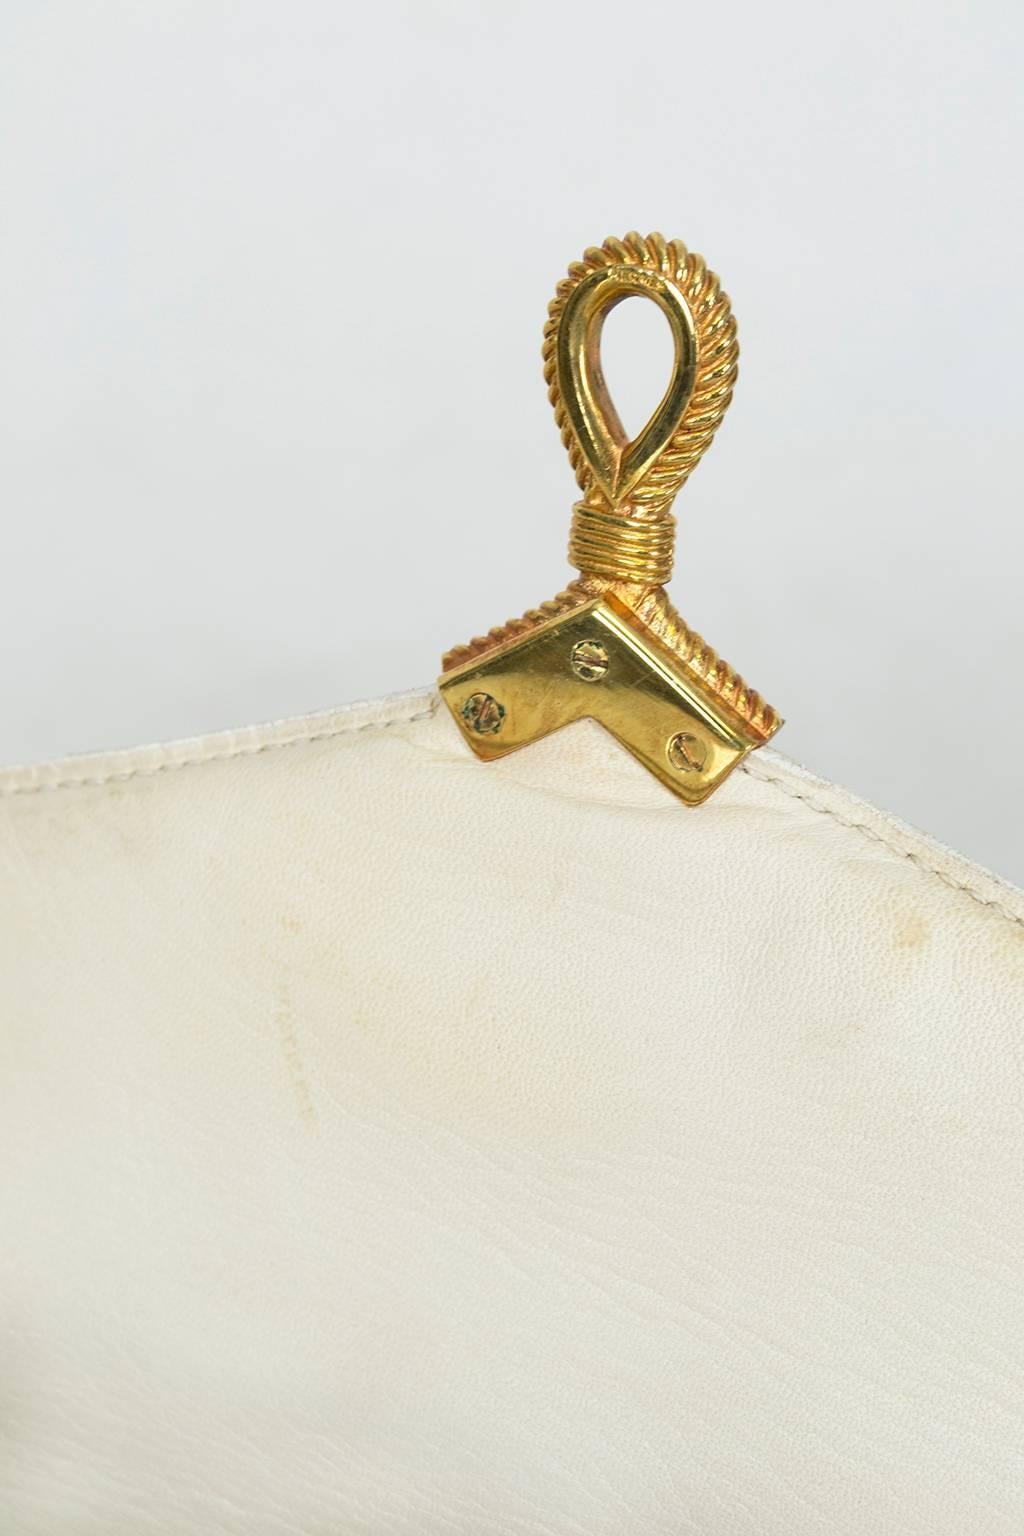 Vintage Hermès Sac Cordelière White Patent Leather Envelope Handbag- 25 cm, 1951 For Sale 1